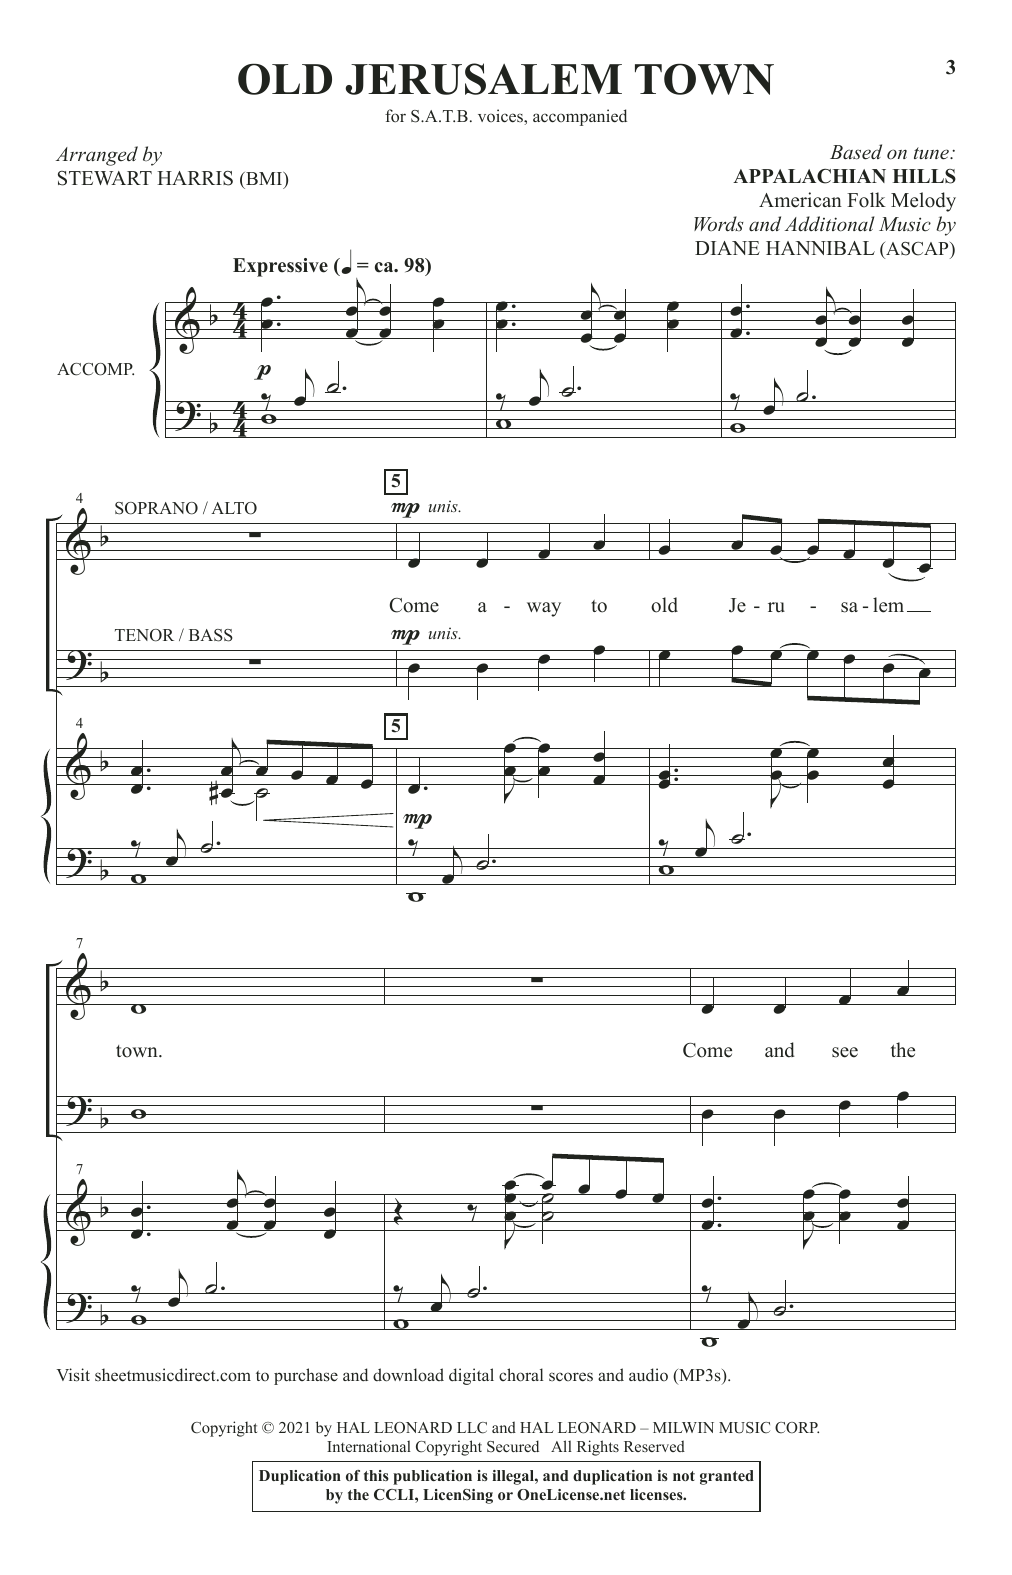 Diane Hannibal Old Jerusalem Town (arr. Stewart Harris) Sheet Music Notes & Chords for SATB Choir - Download or Print PDF